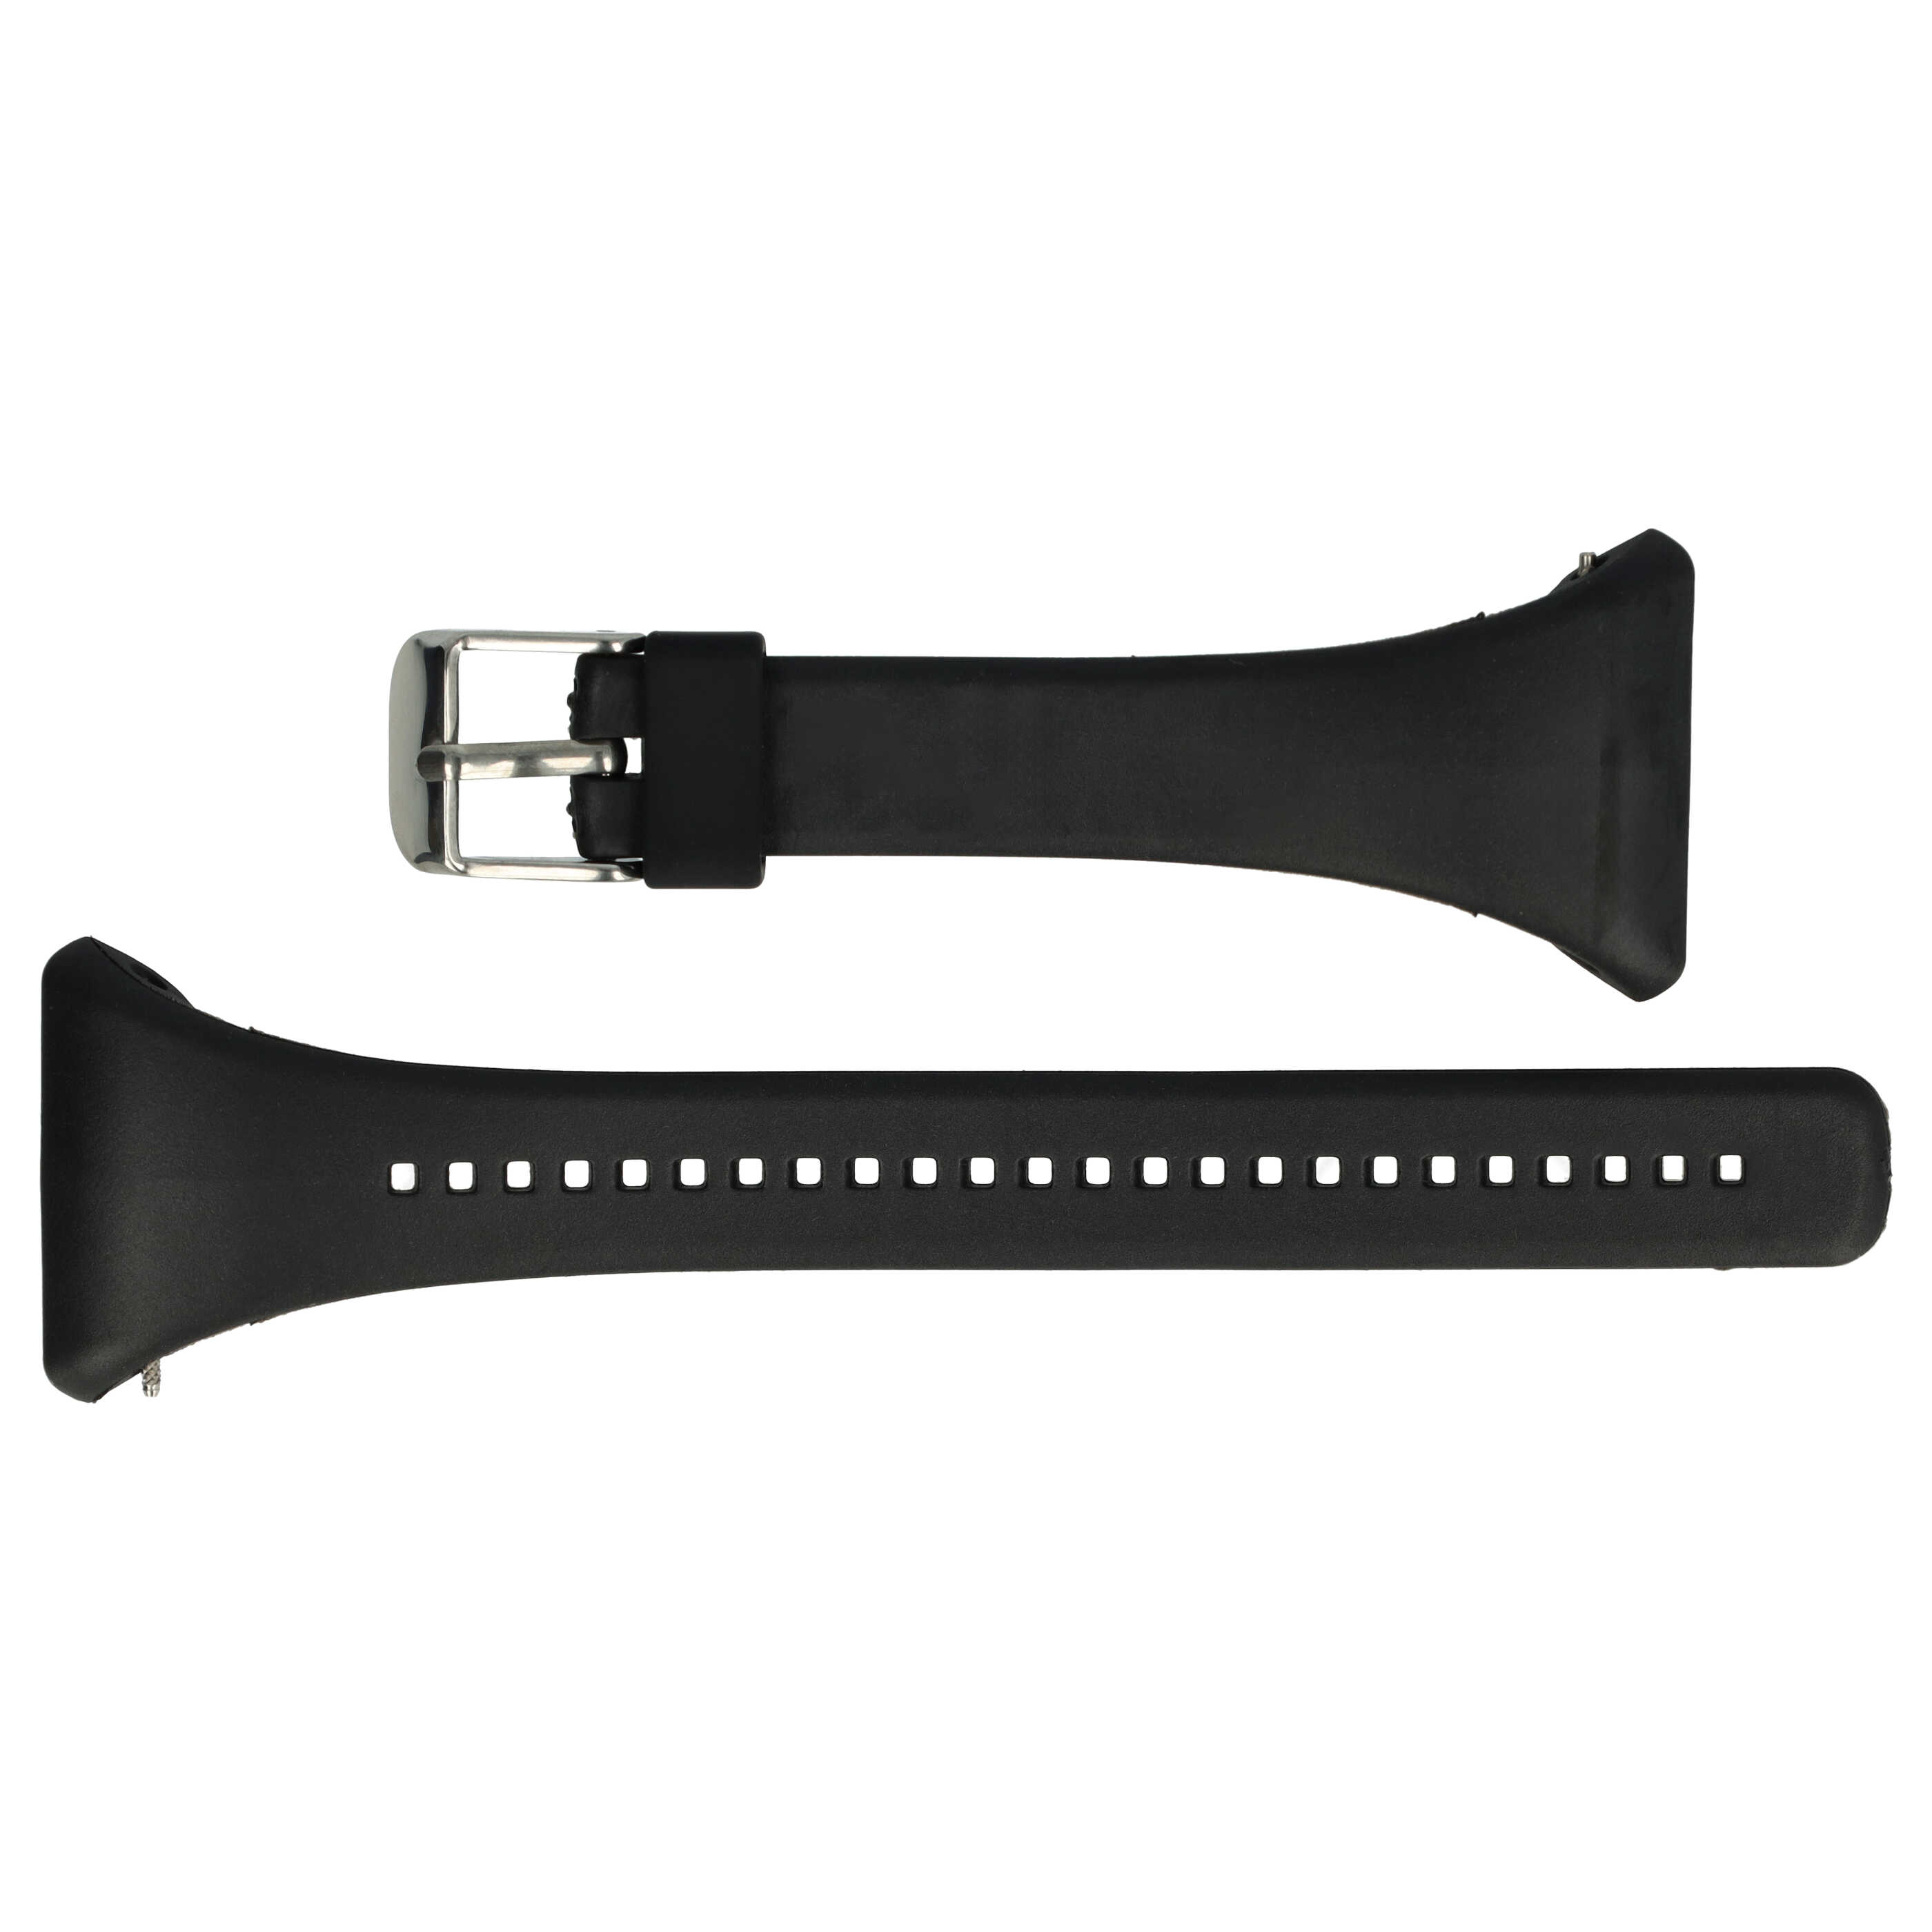 correa L para Polar smartwatch - largo 11,5cm + 8,5 cm, negro